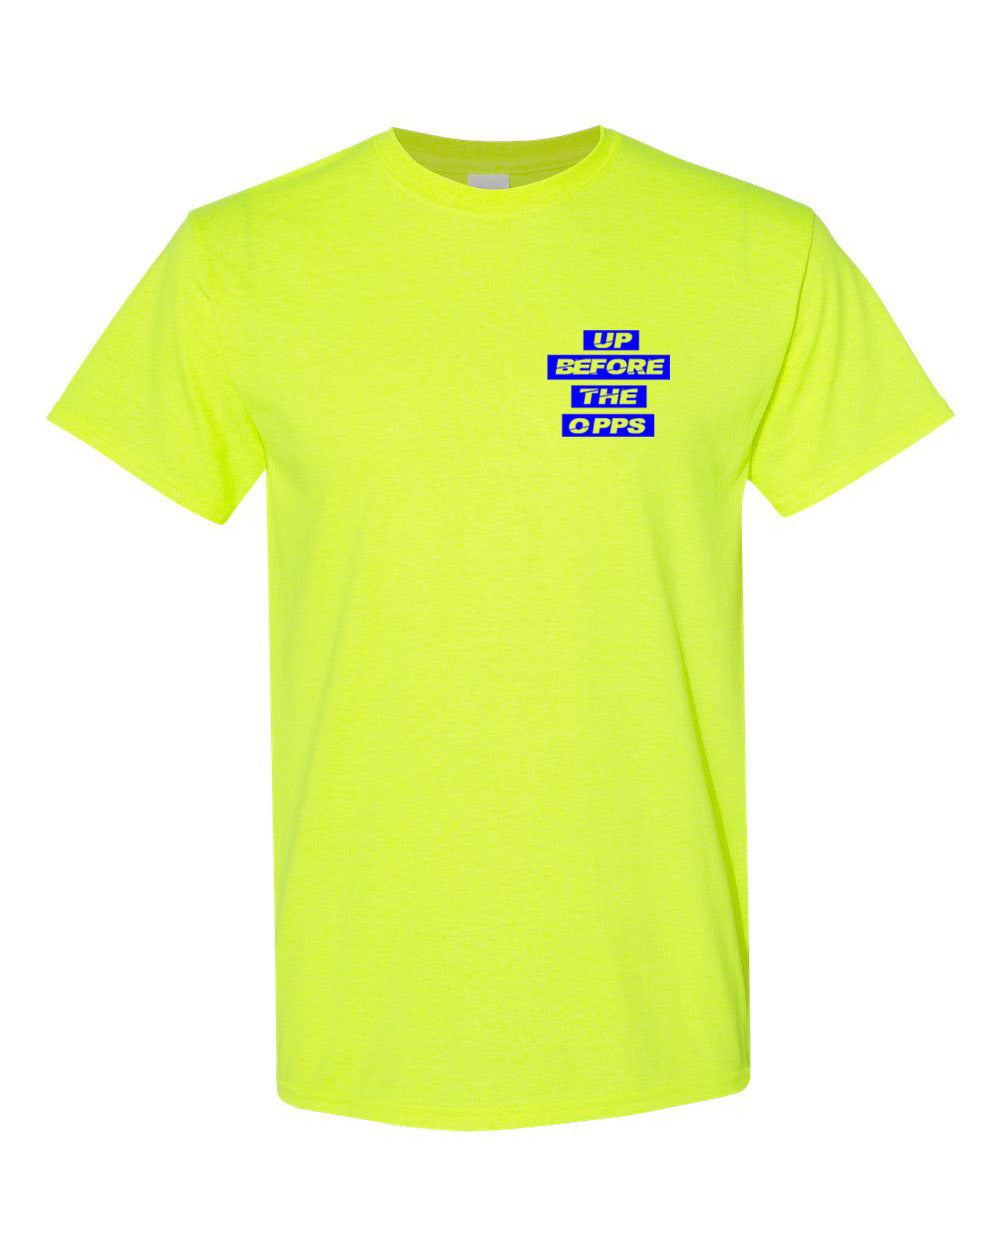 UBTO (Floss) T-Shirt Neon Safety Yellow